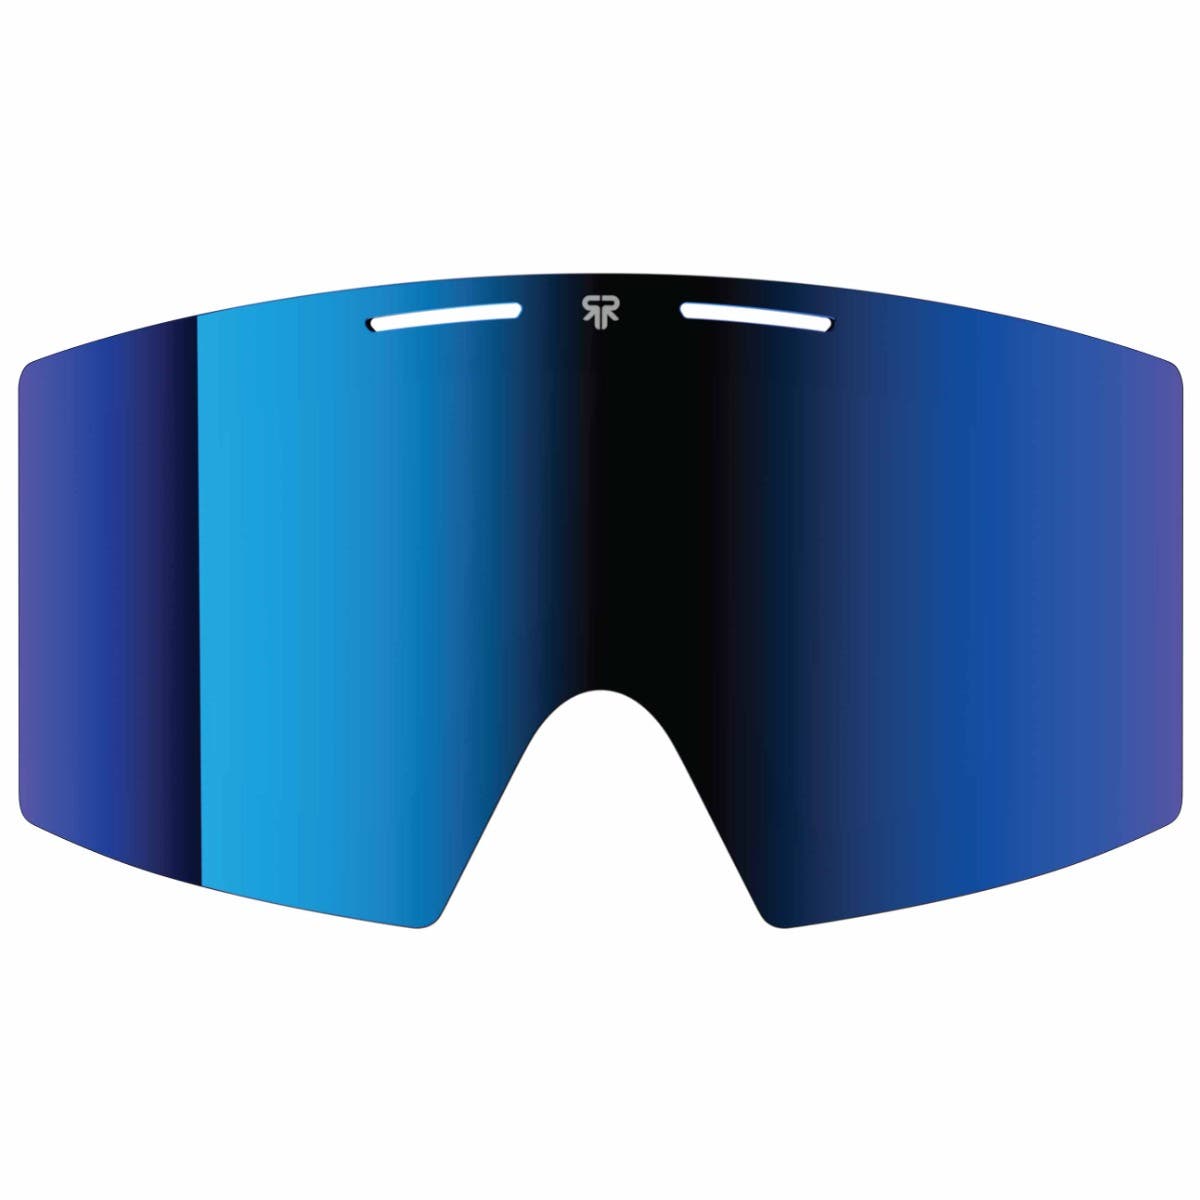 LITE Goggle Lens - Polarized Blue